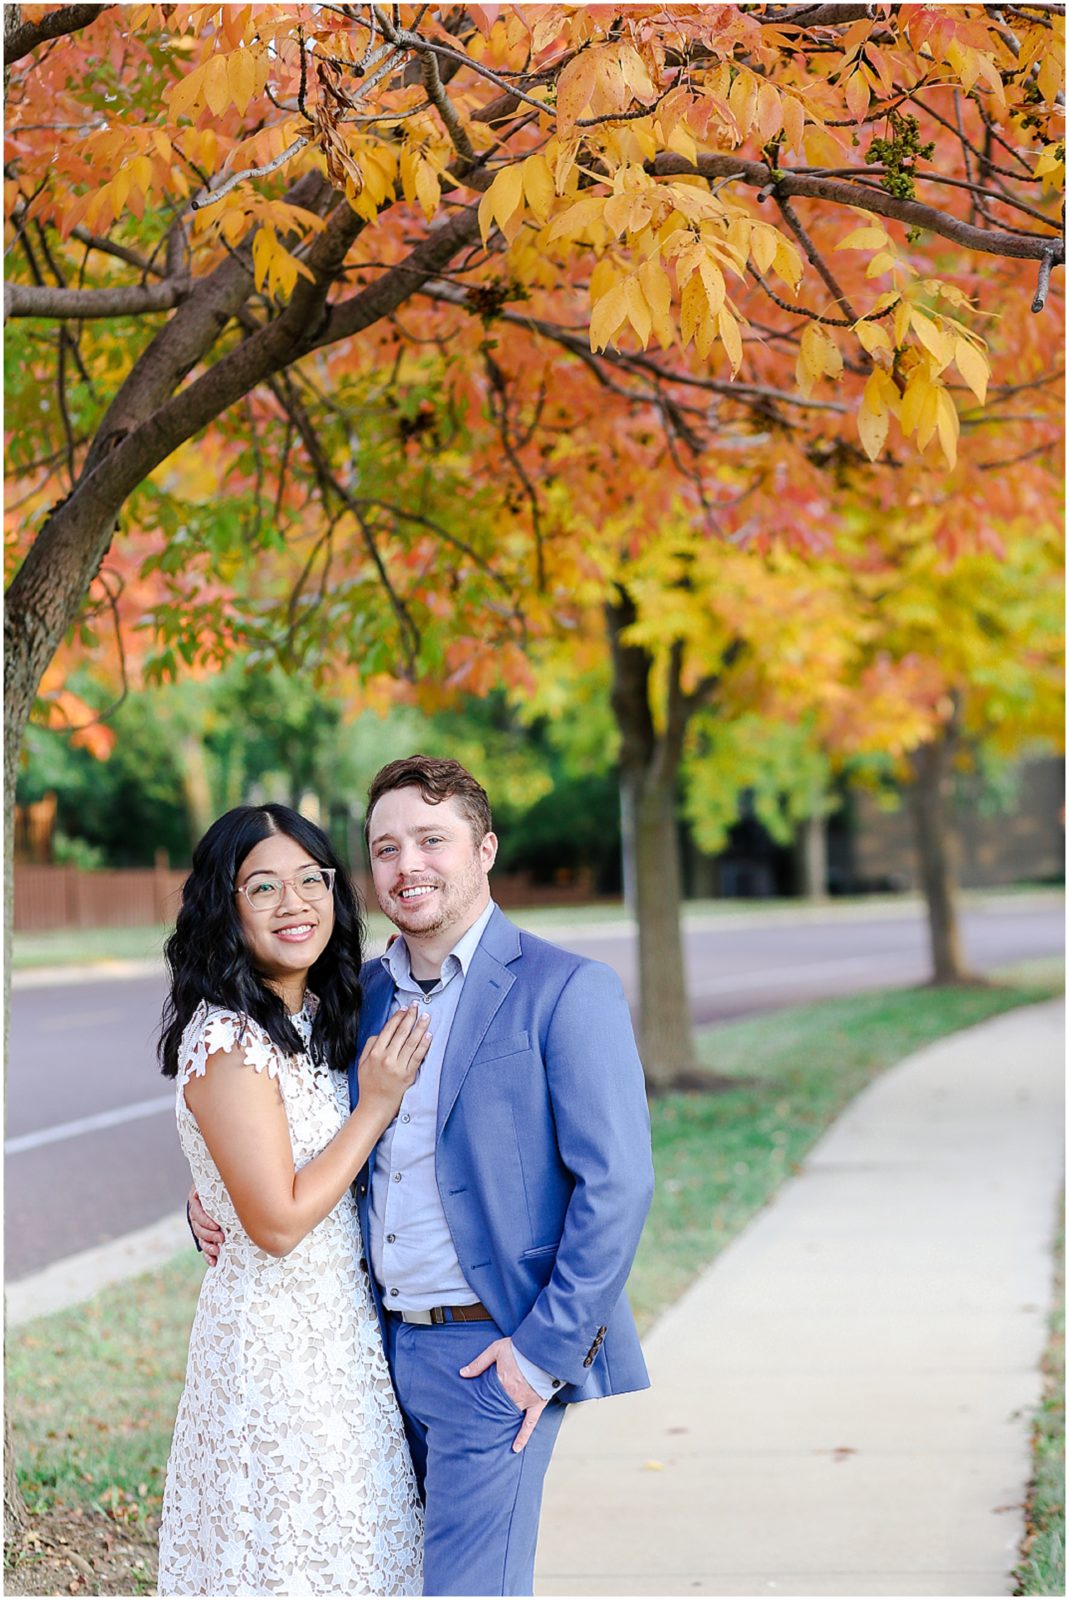 Engagement Photos in Overland Park Kansas - KC Wedding and Portrait Photographer